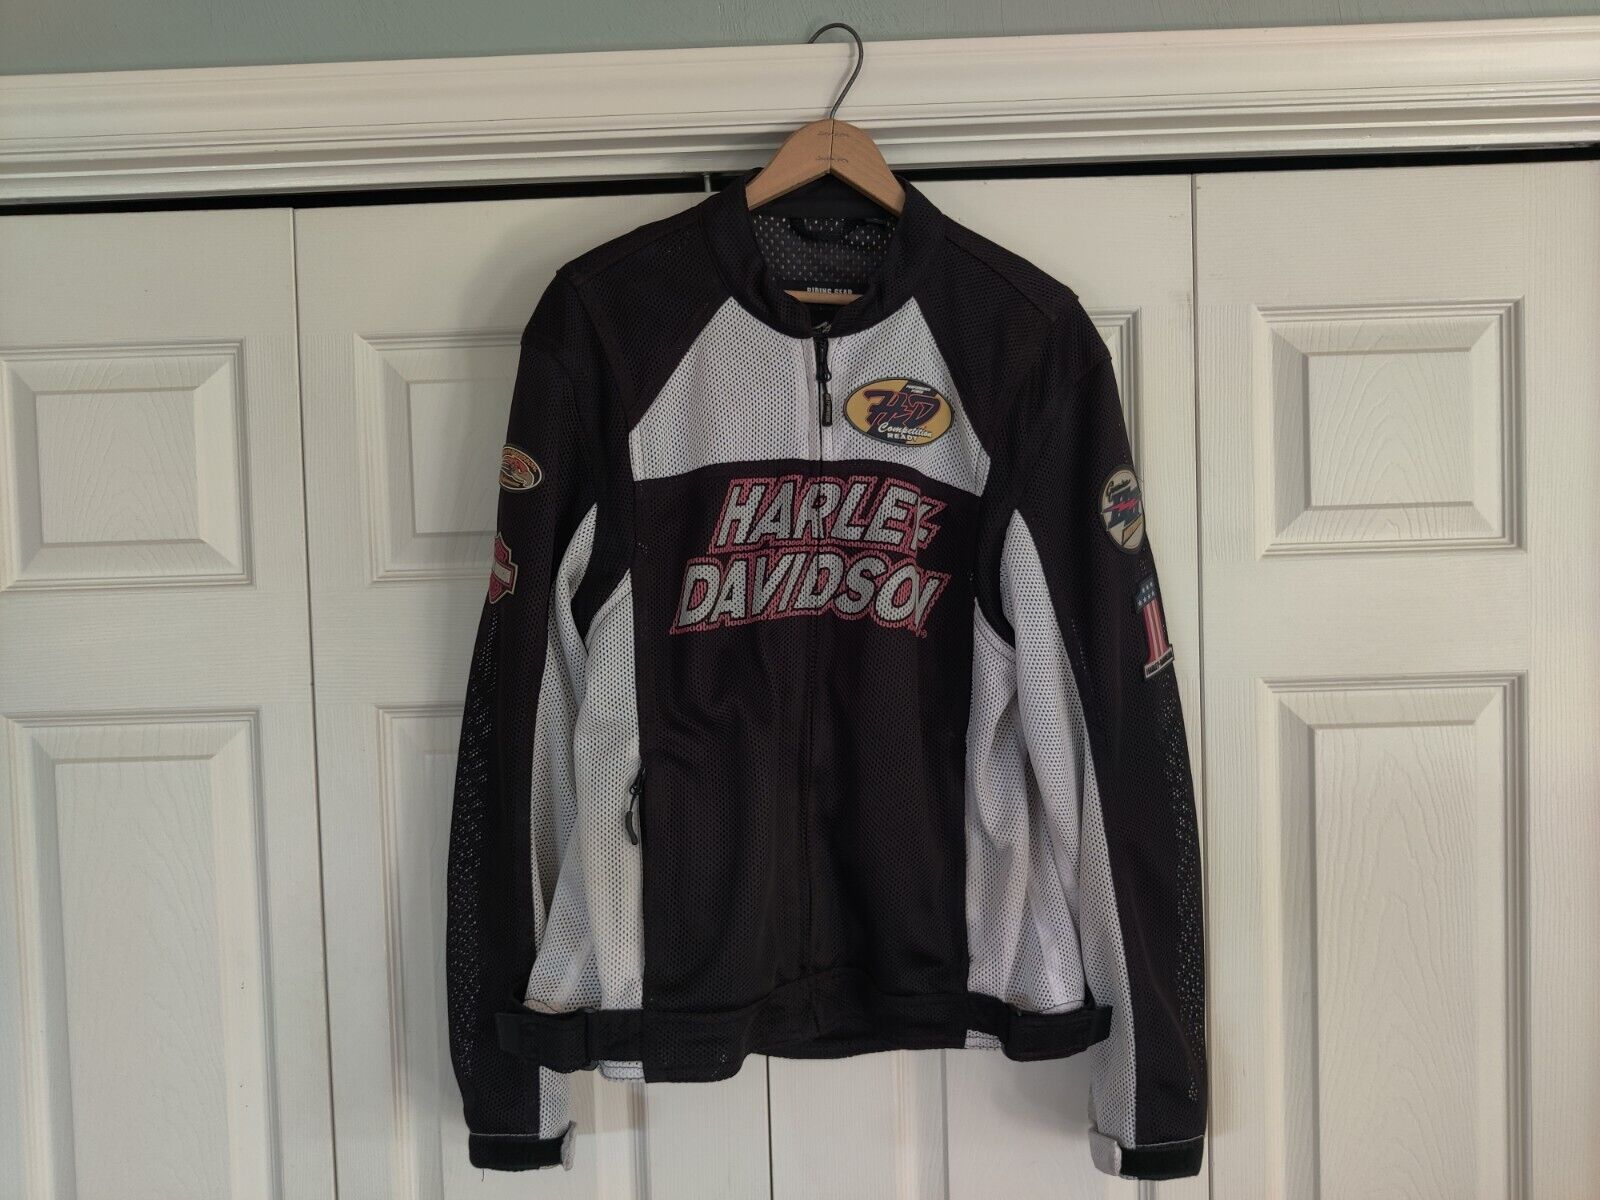 Harley Davidson mens summer mesh riding jacket, size medium